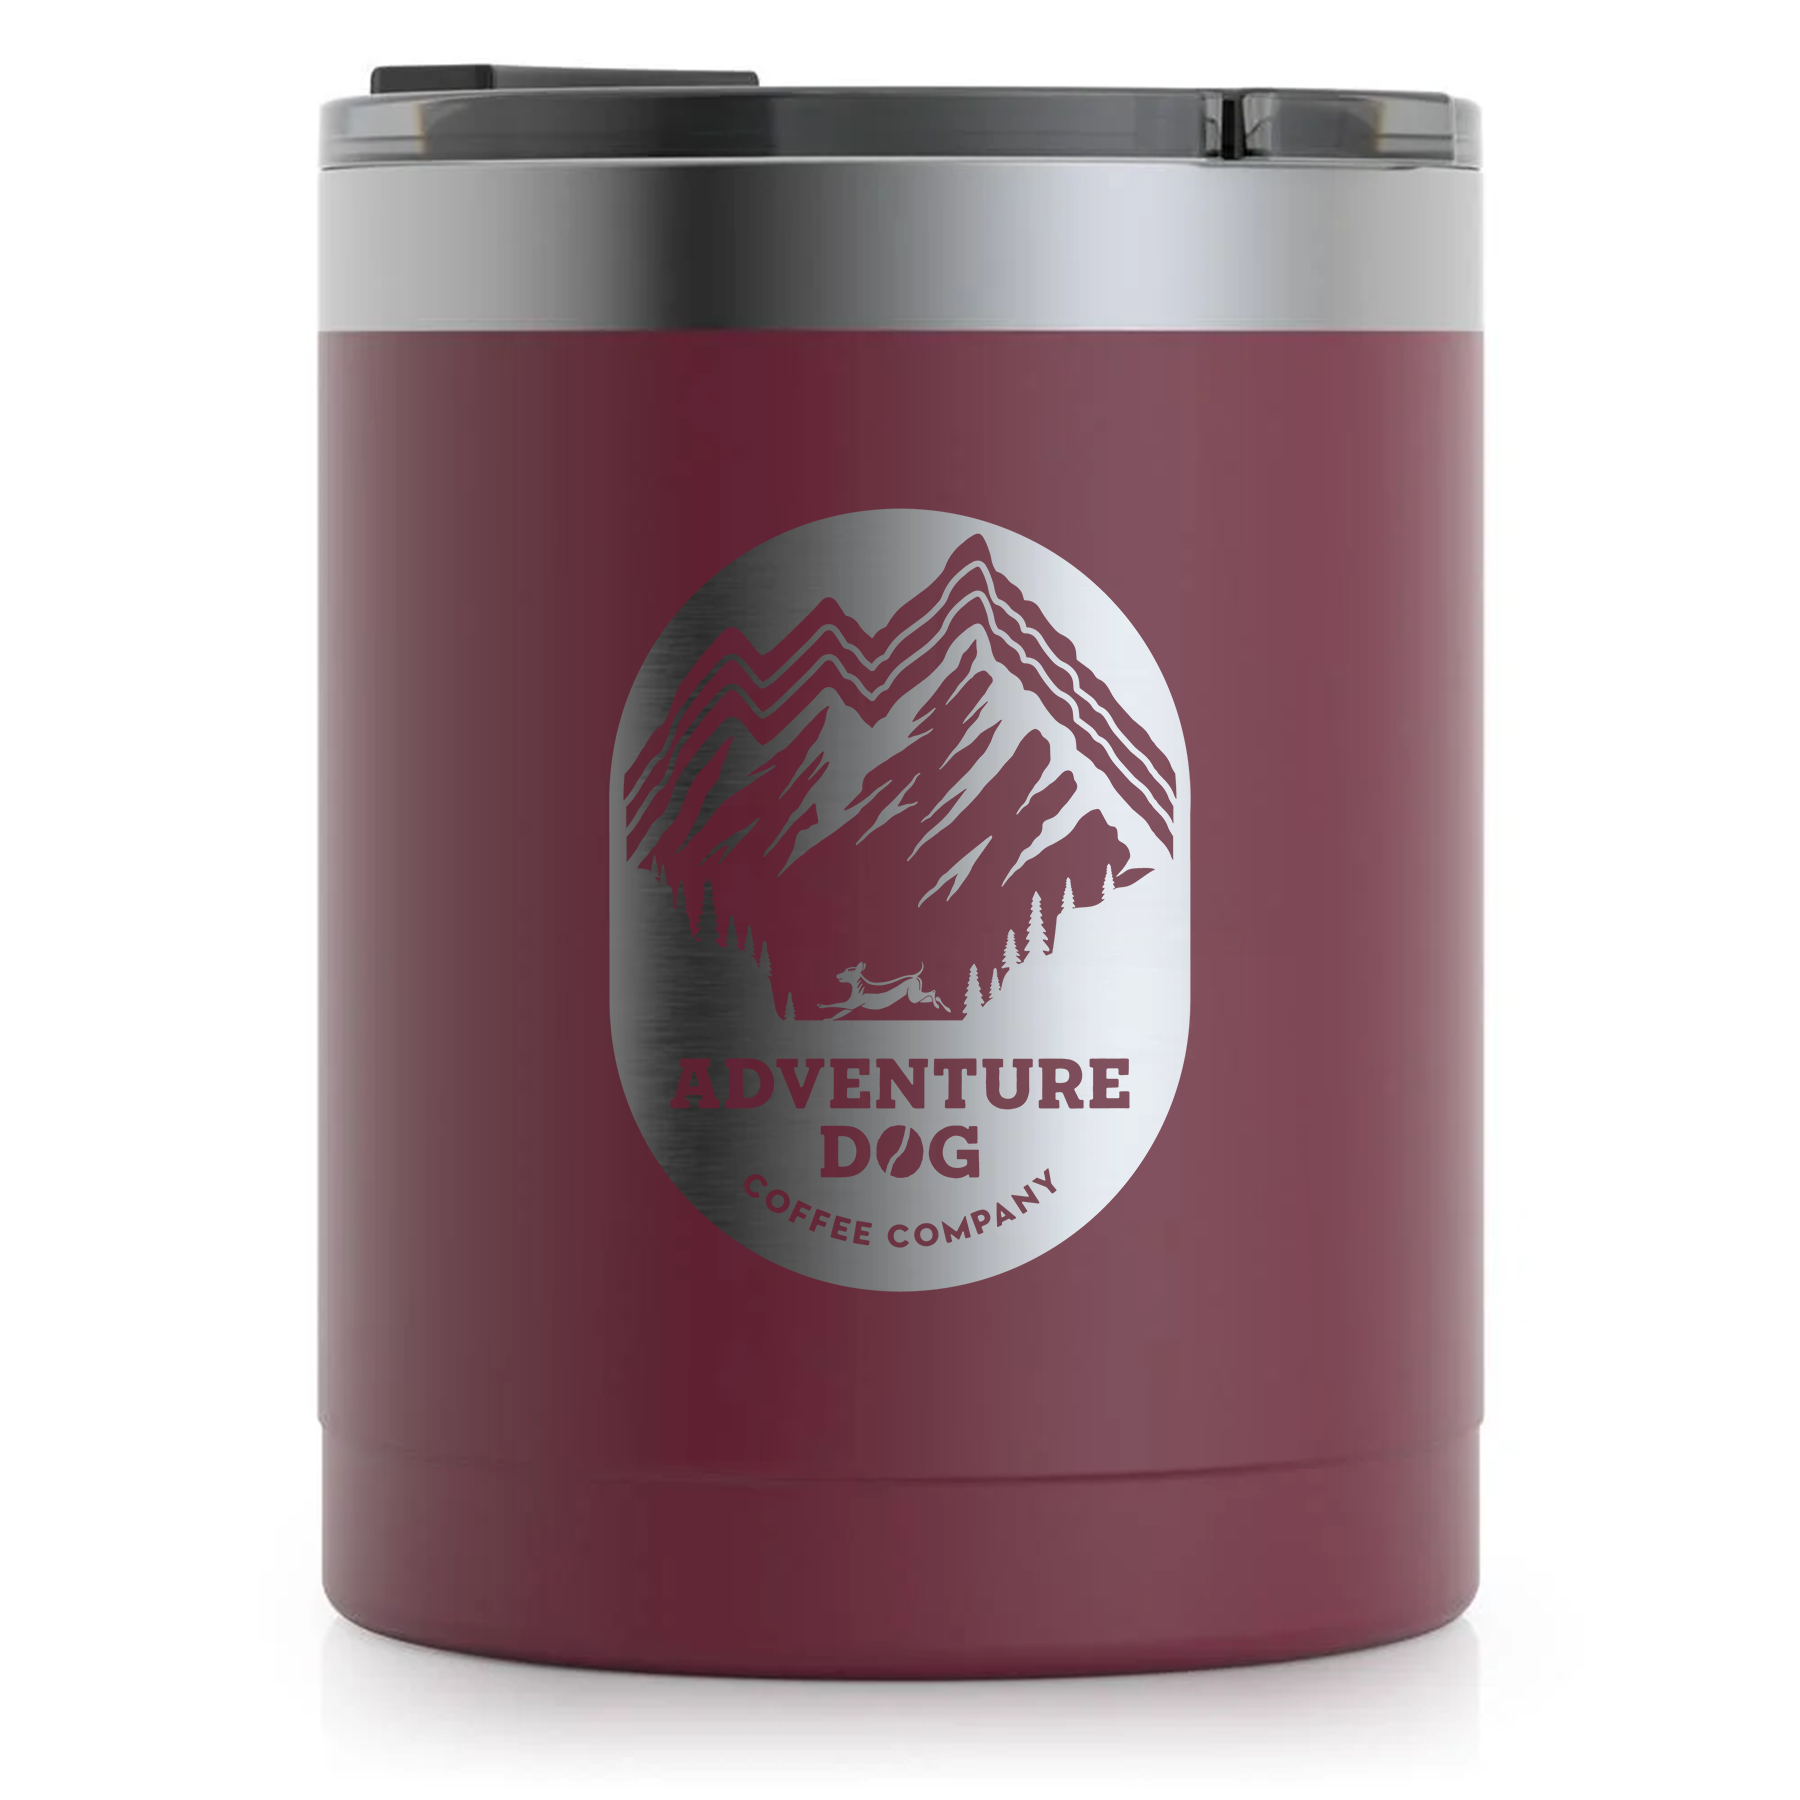 Ozark Trail Double-Wall Vacuum-Sealed Camping Coffee Mug